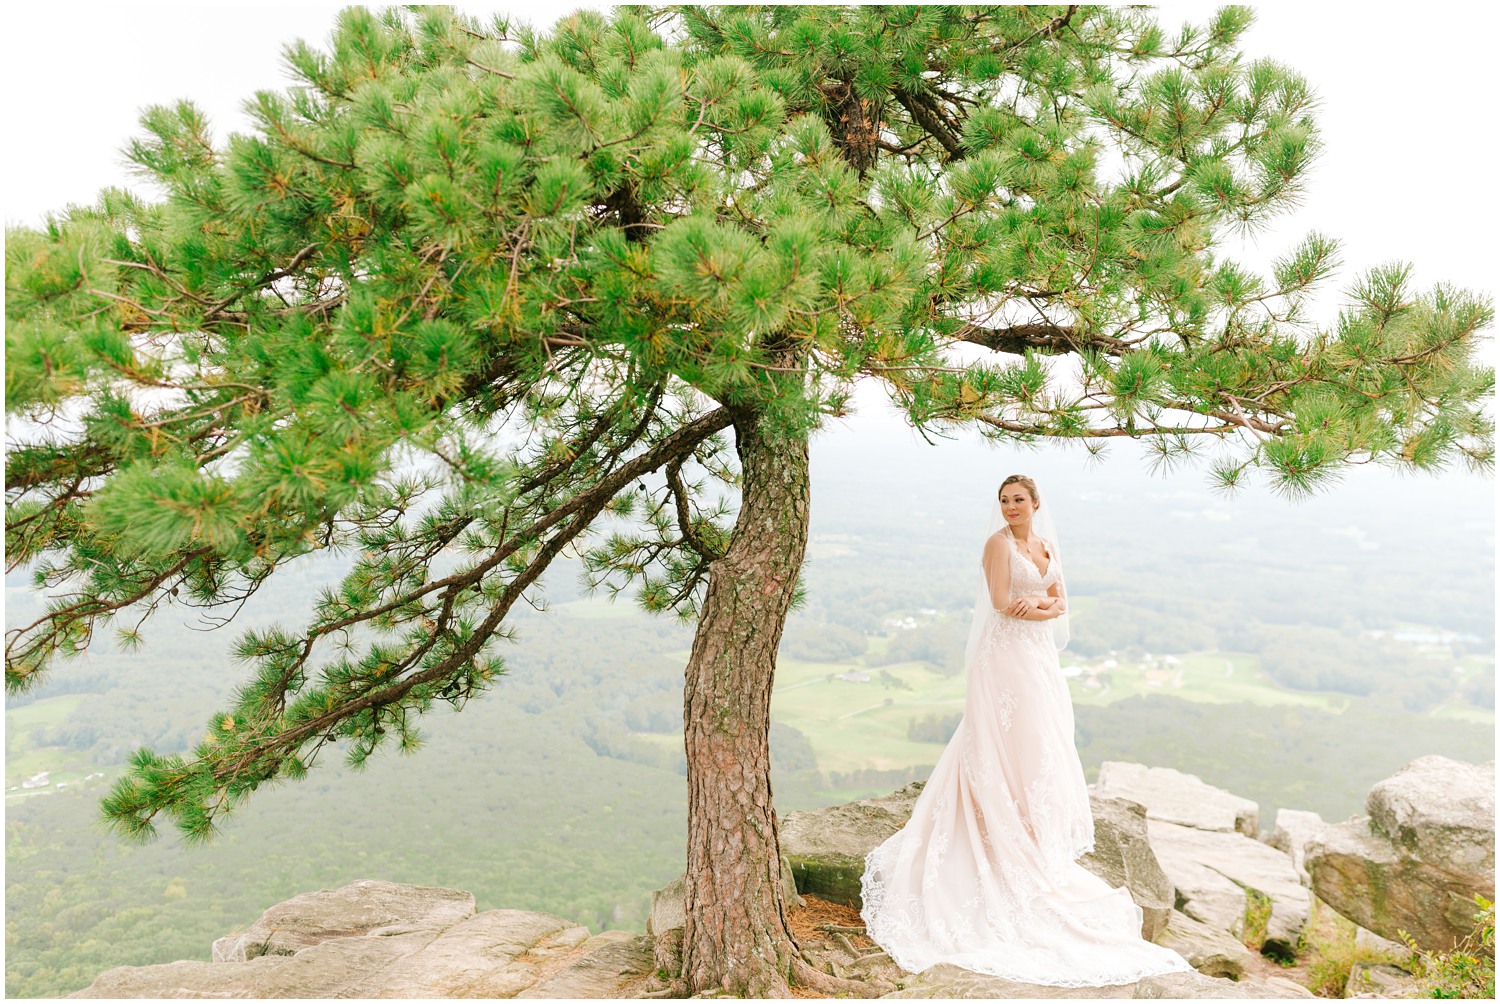 North Carolina bridal portraits under tree in state park